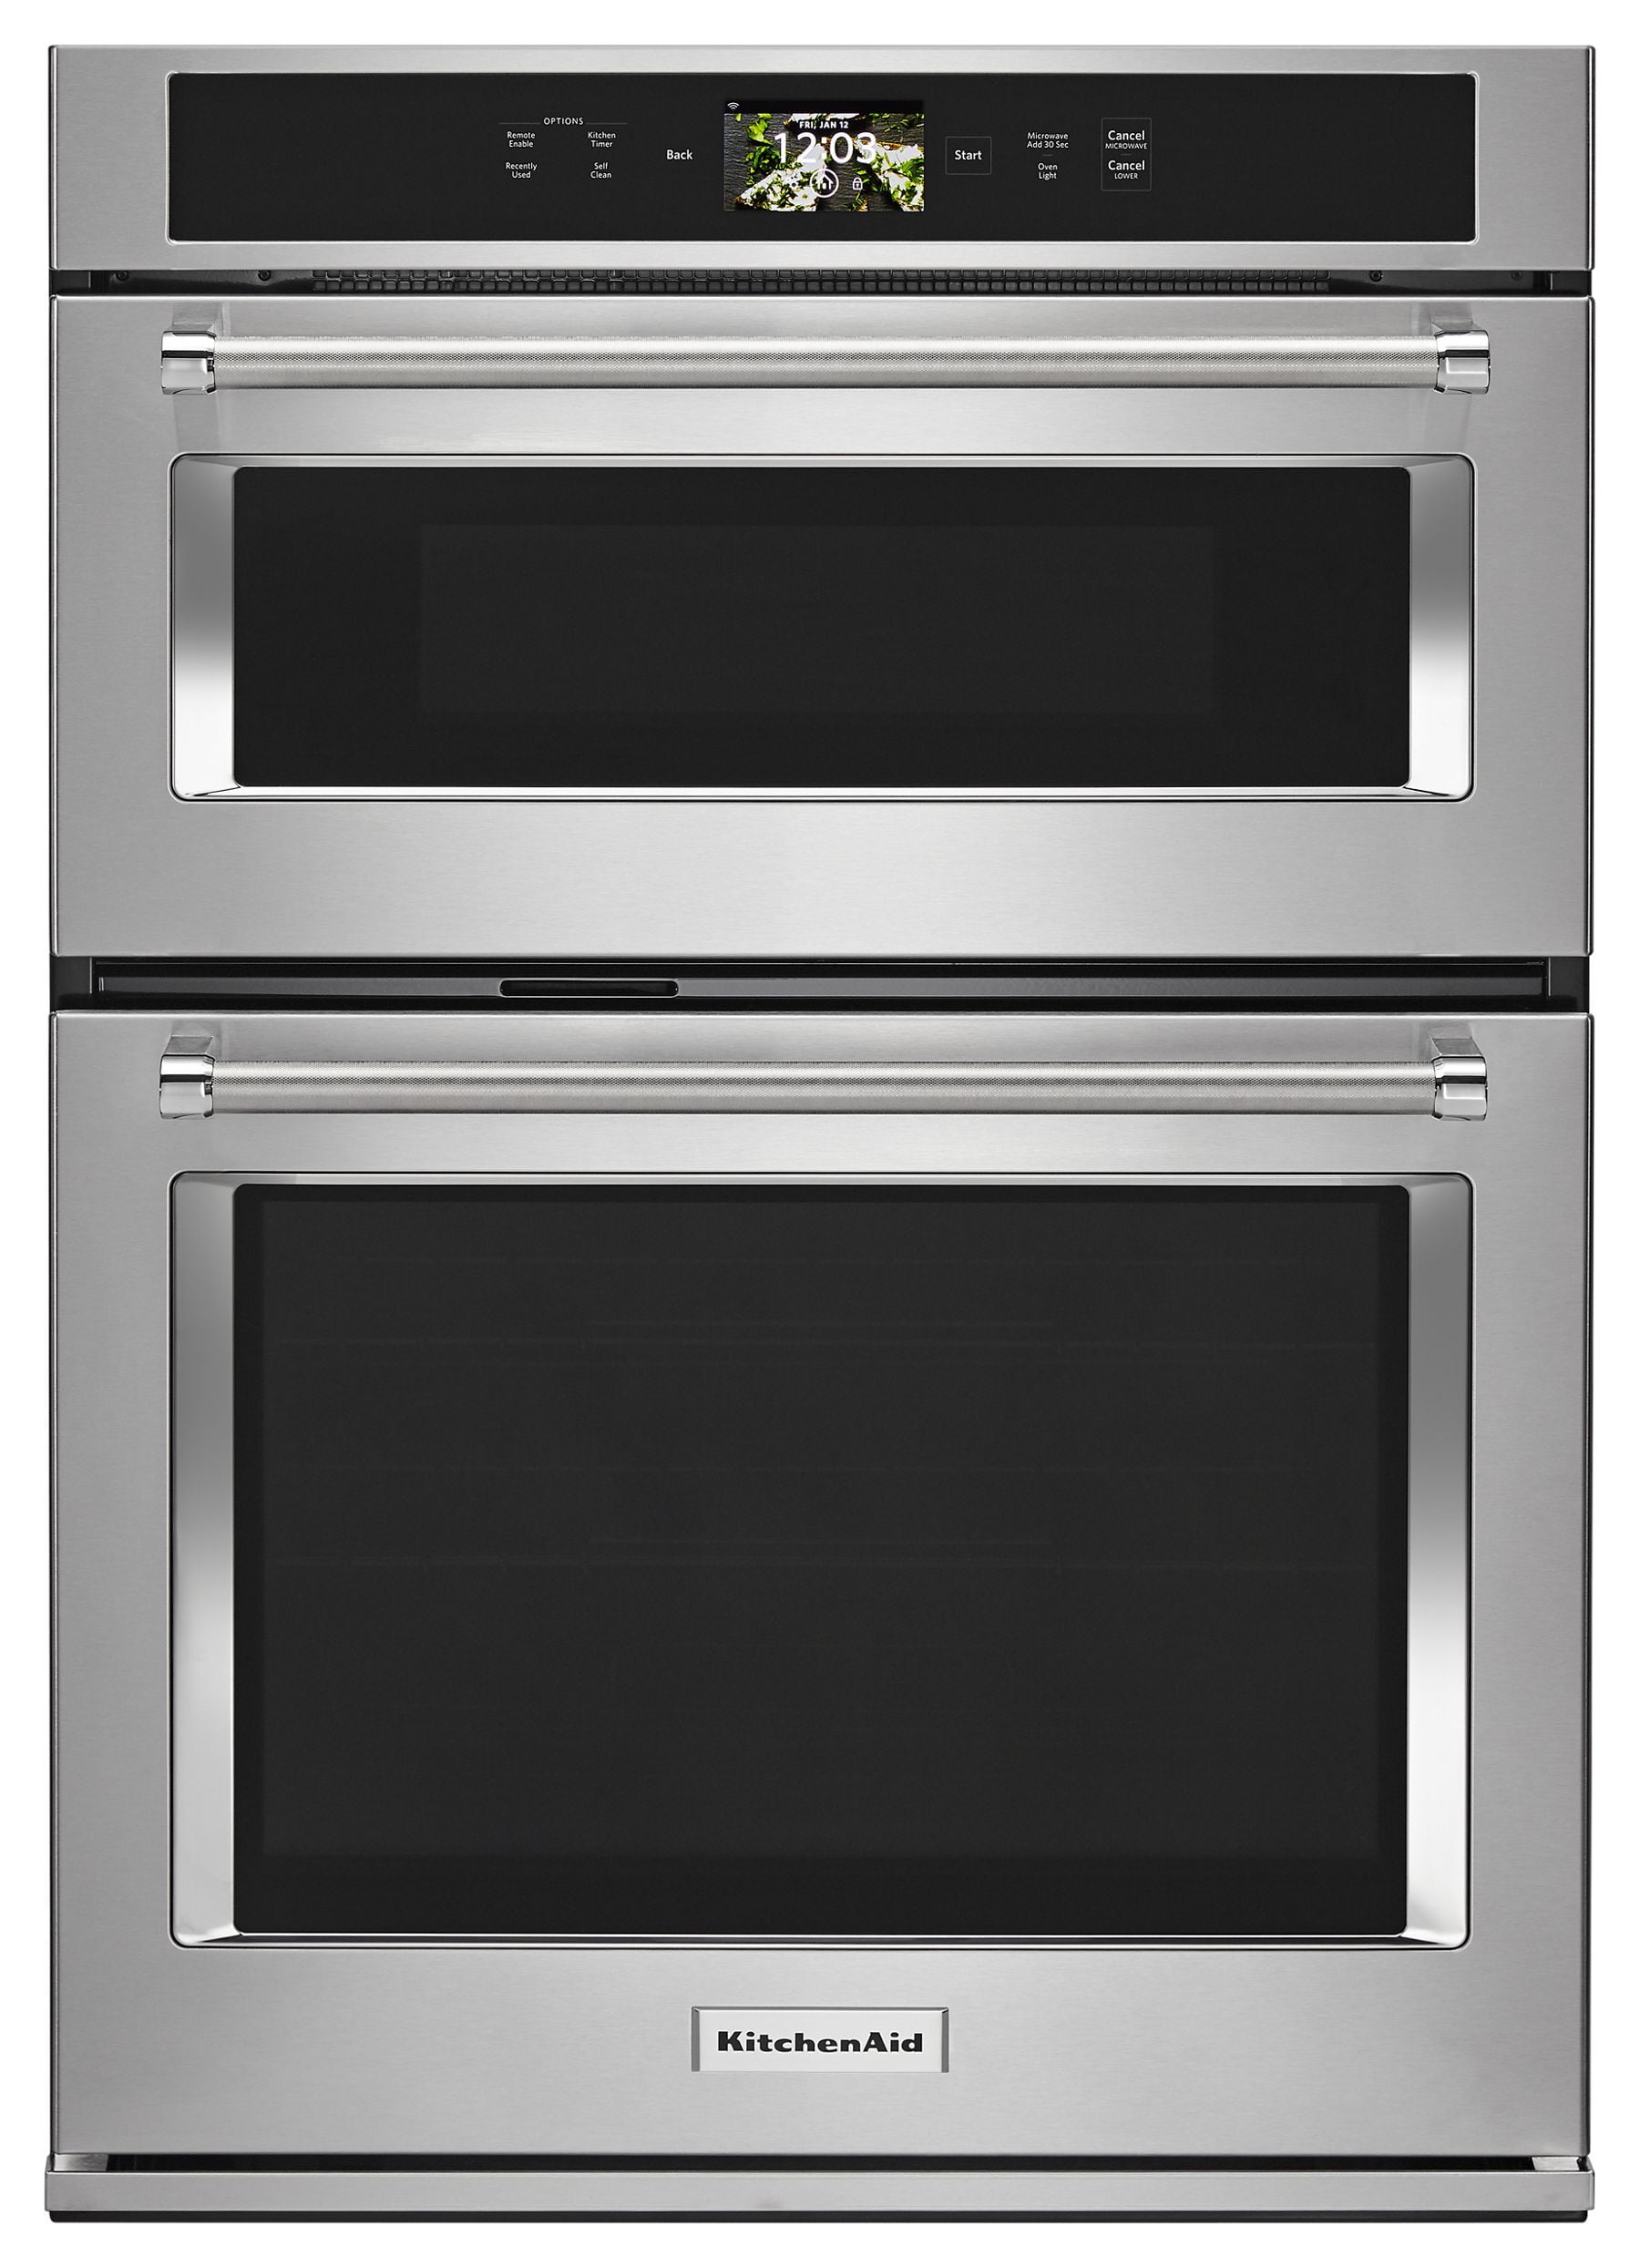 Stuck kitchenaid oven lock : r/Appliances